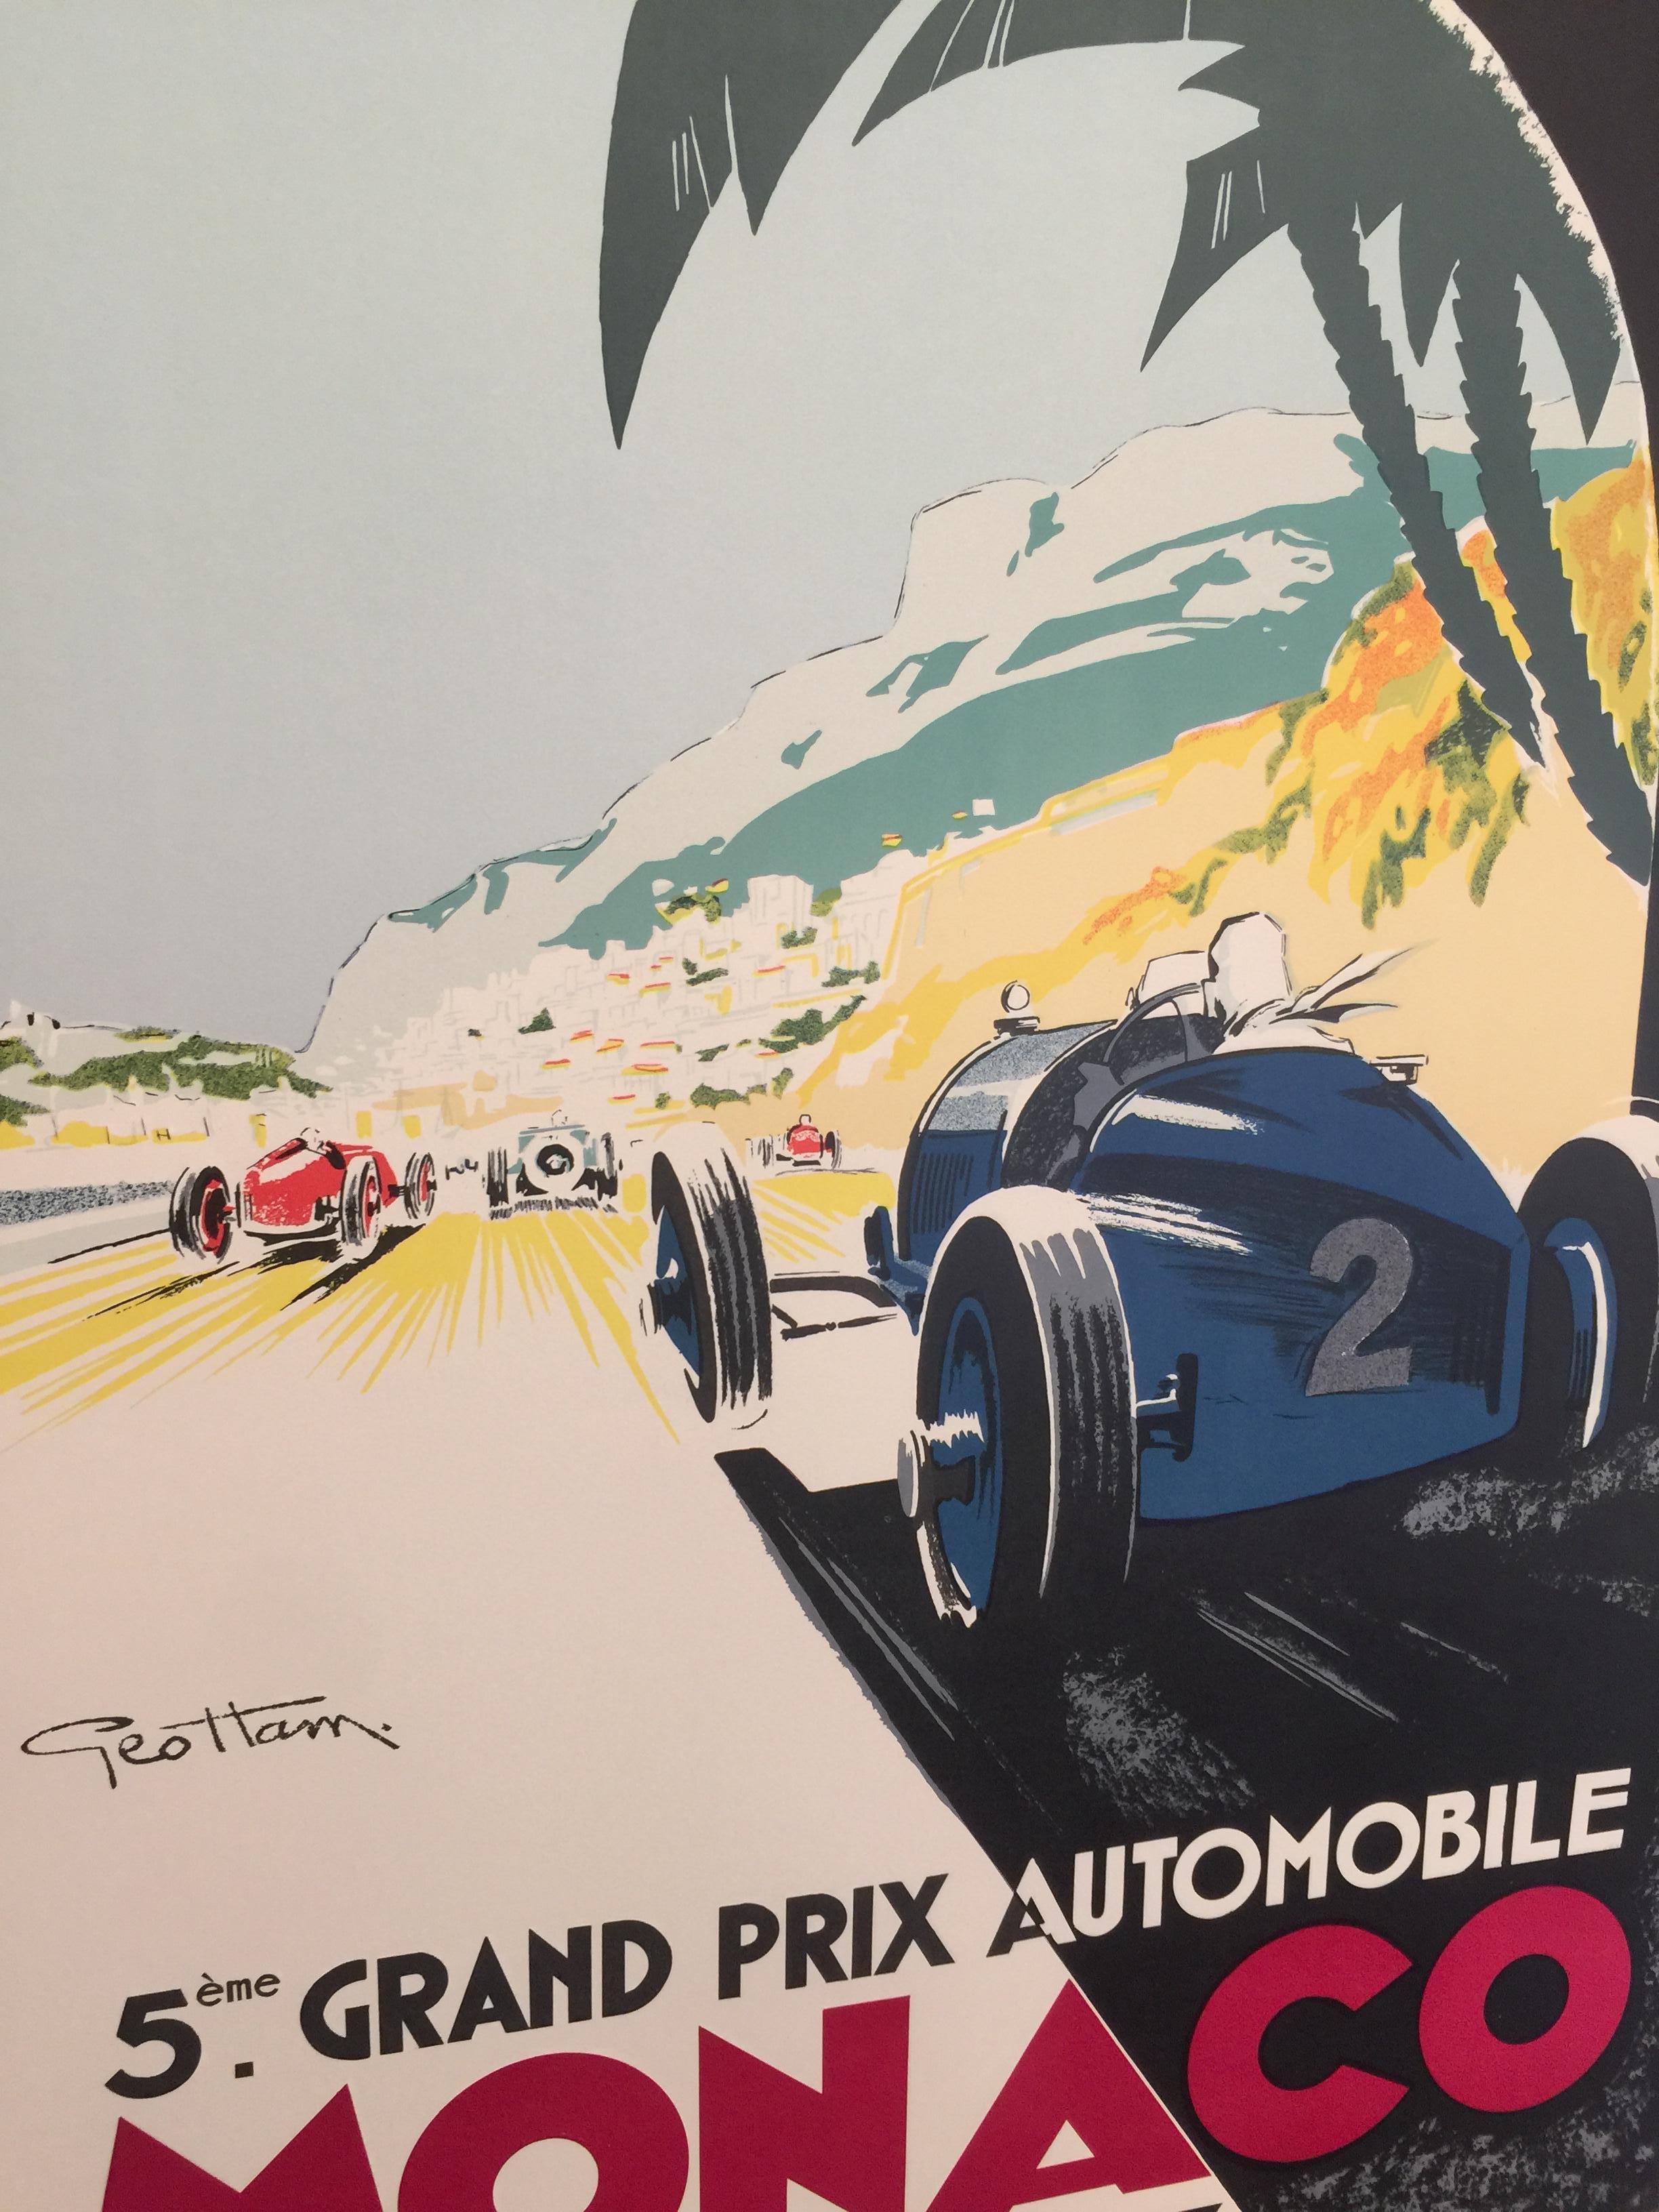 Art Deco Authorized Edition Vintage Monaco Grand Prix Car Poster by Geo Ham, 1933